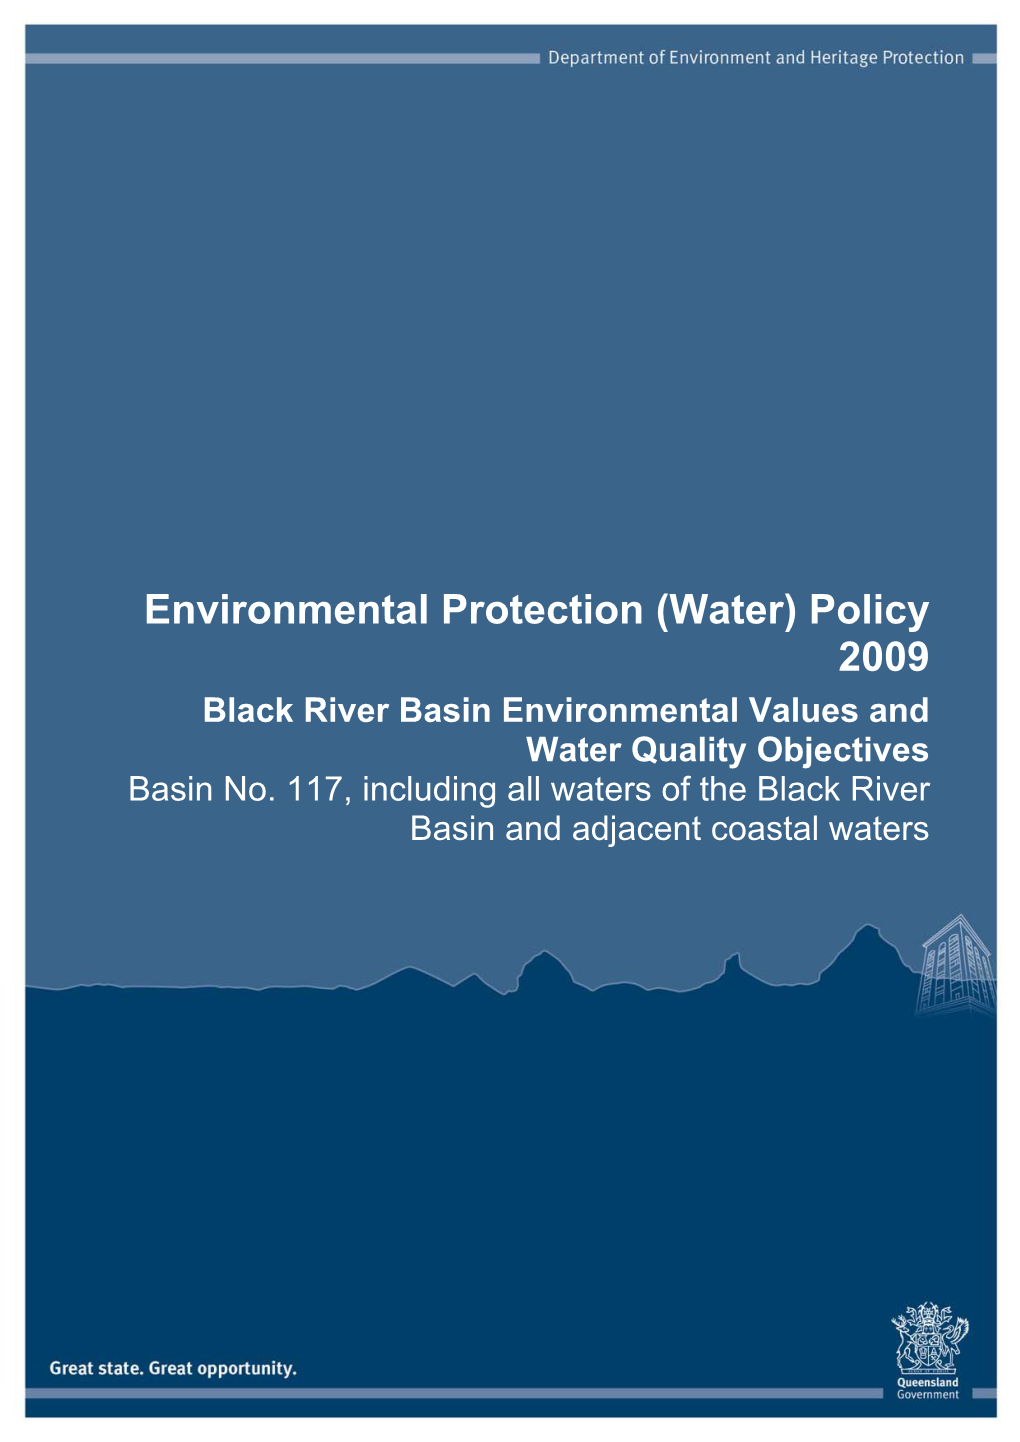 Black River Basin Environmental Values and Water Quality Objectives Basin No